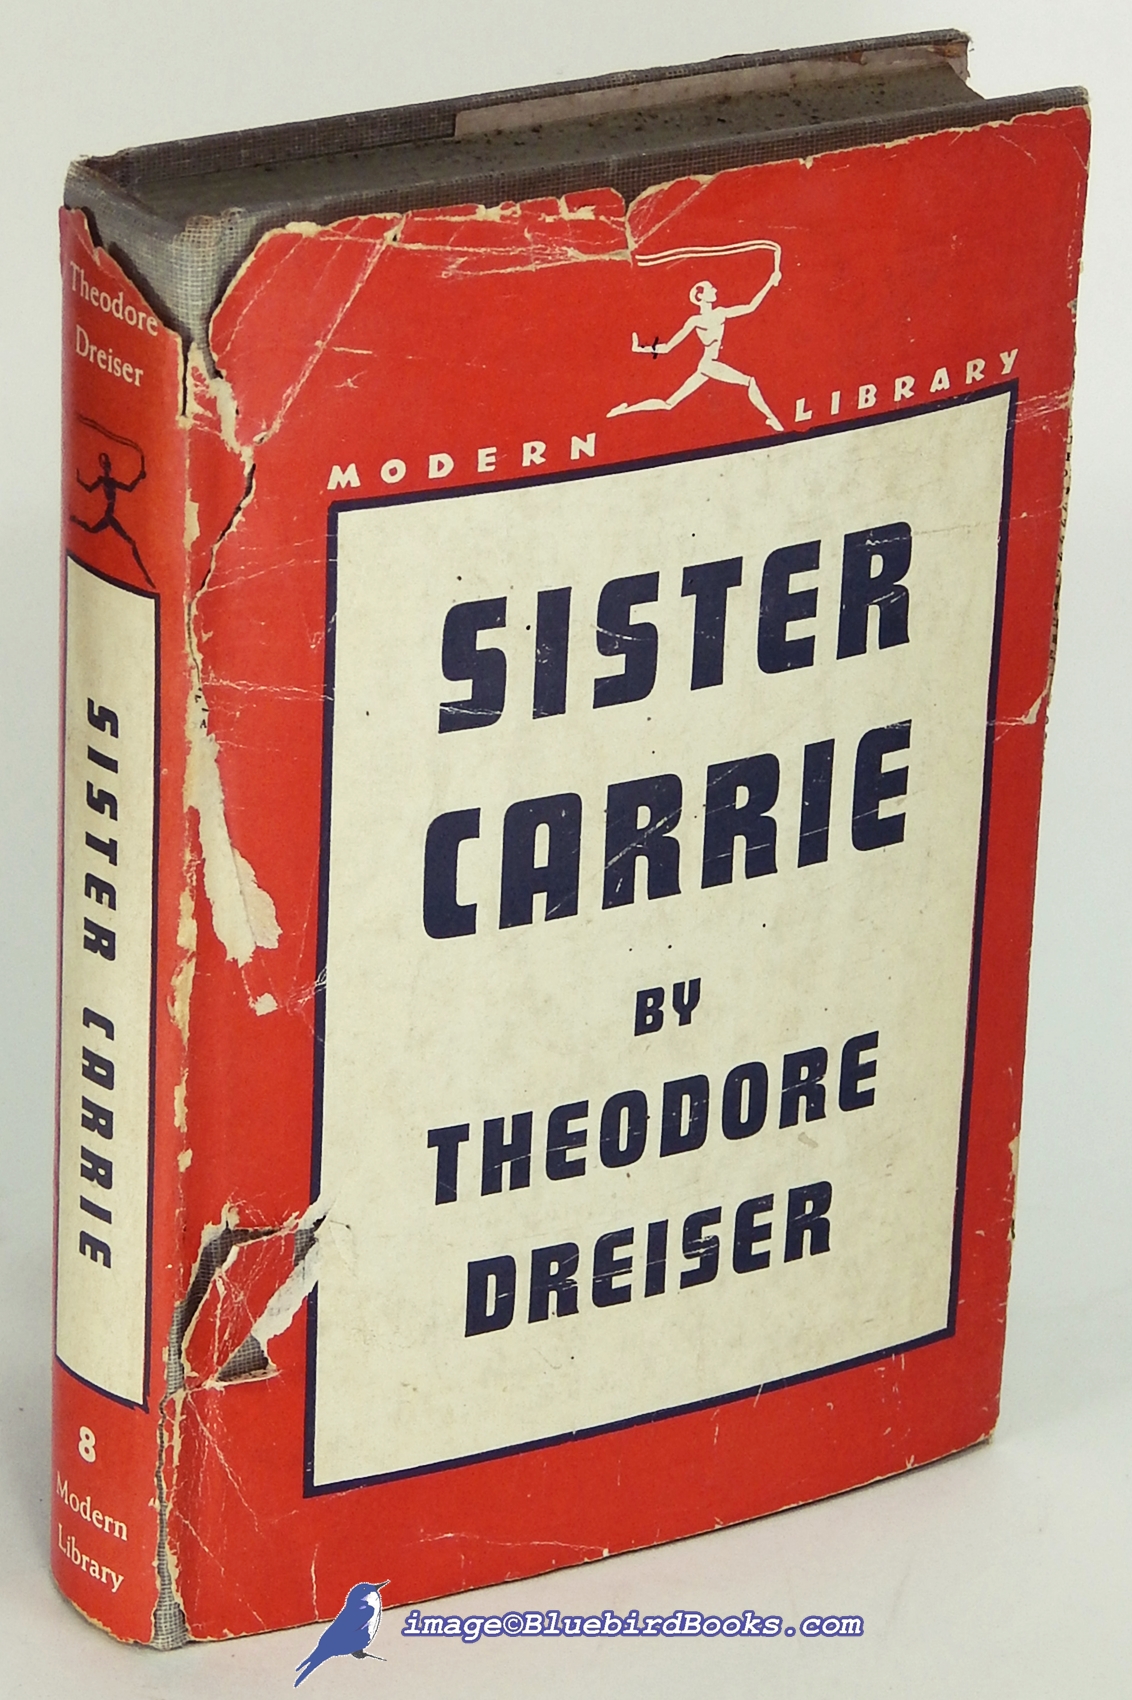 DREISER, THEODORE - Sister Carrie (Modern Library #8. 2)